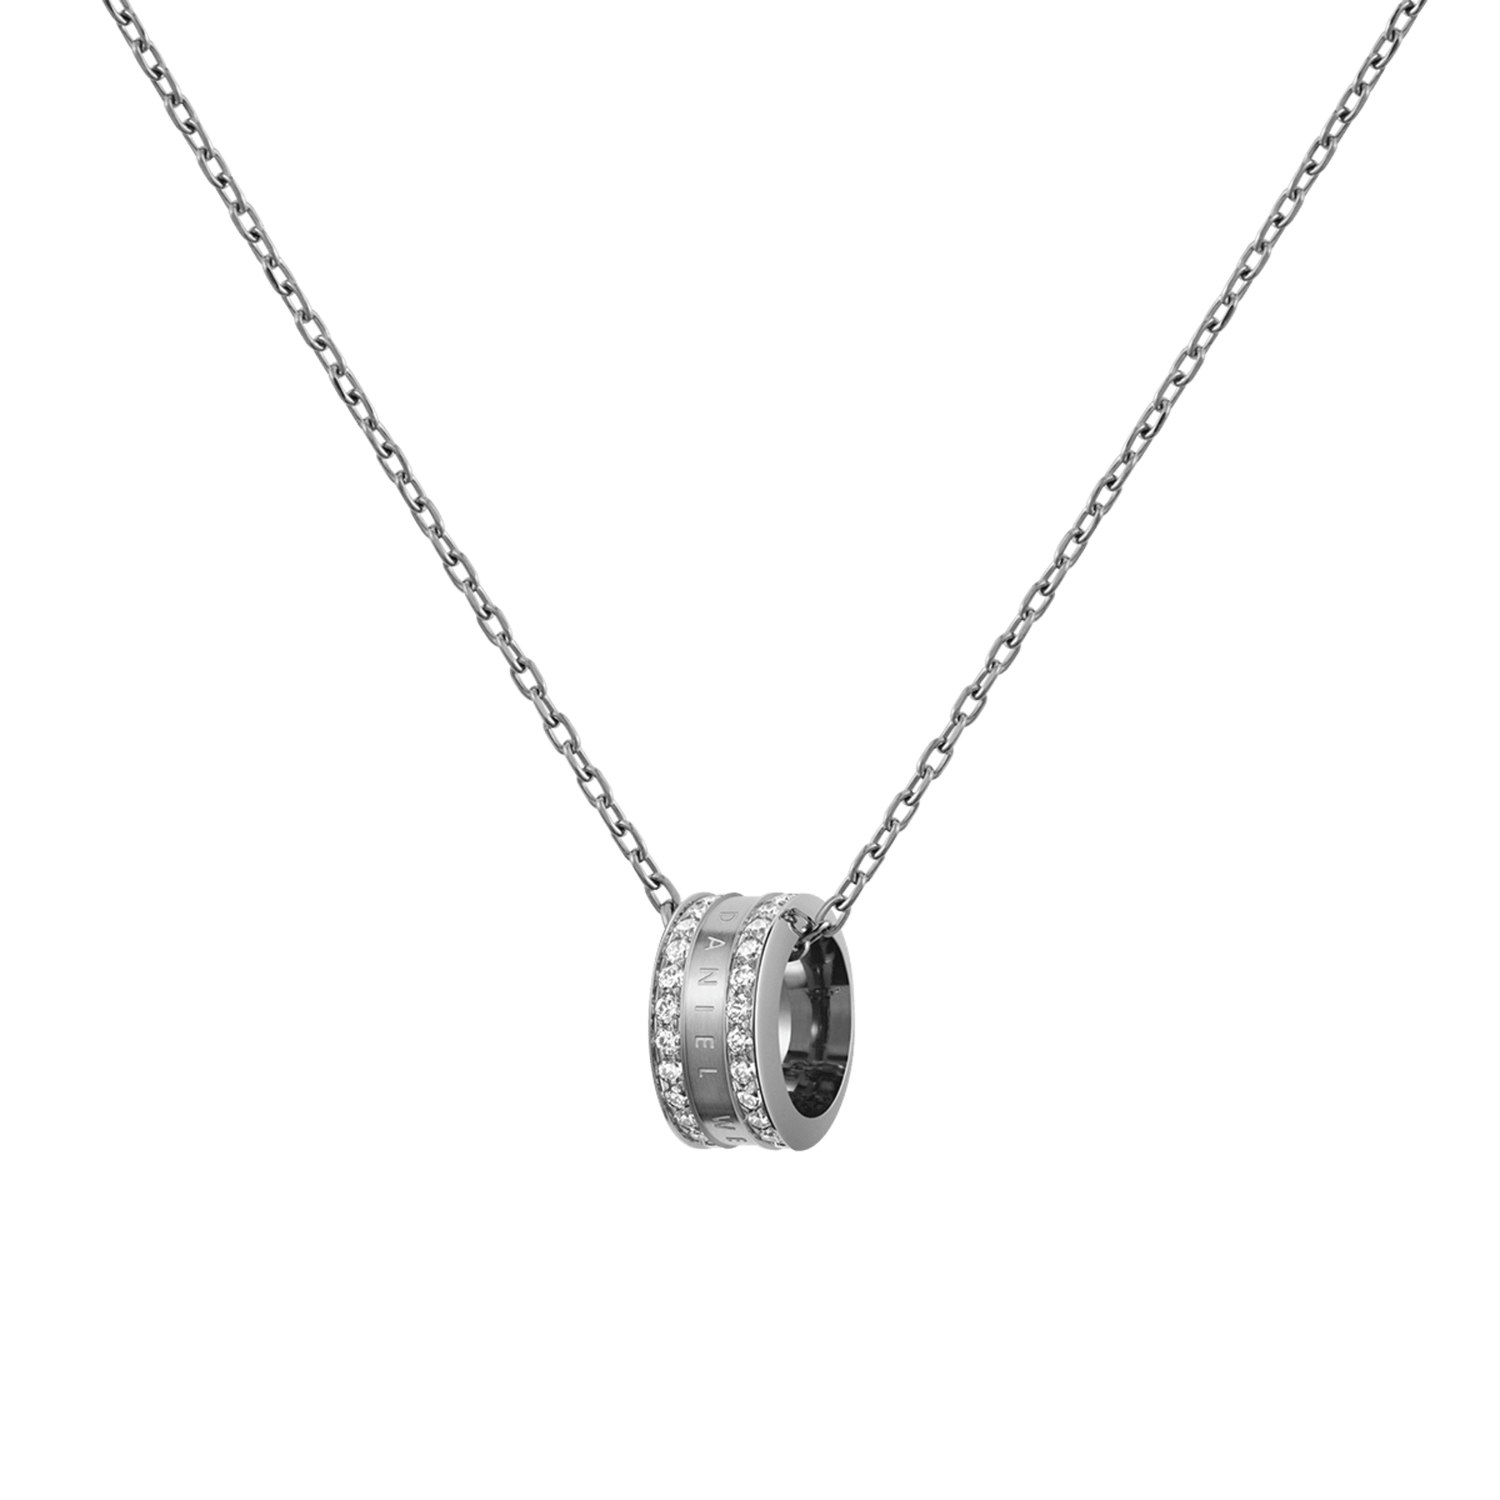 Elan Lumine Necklace Silver